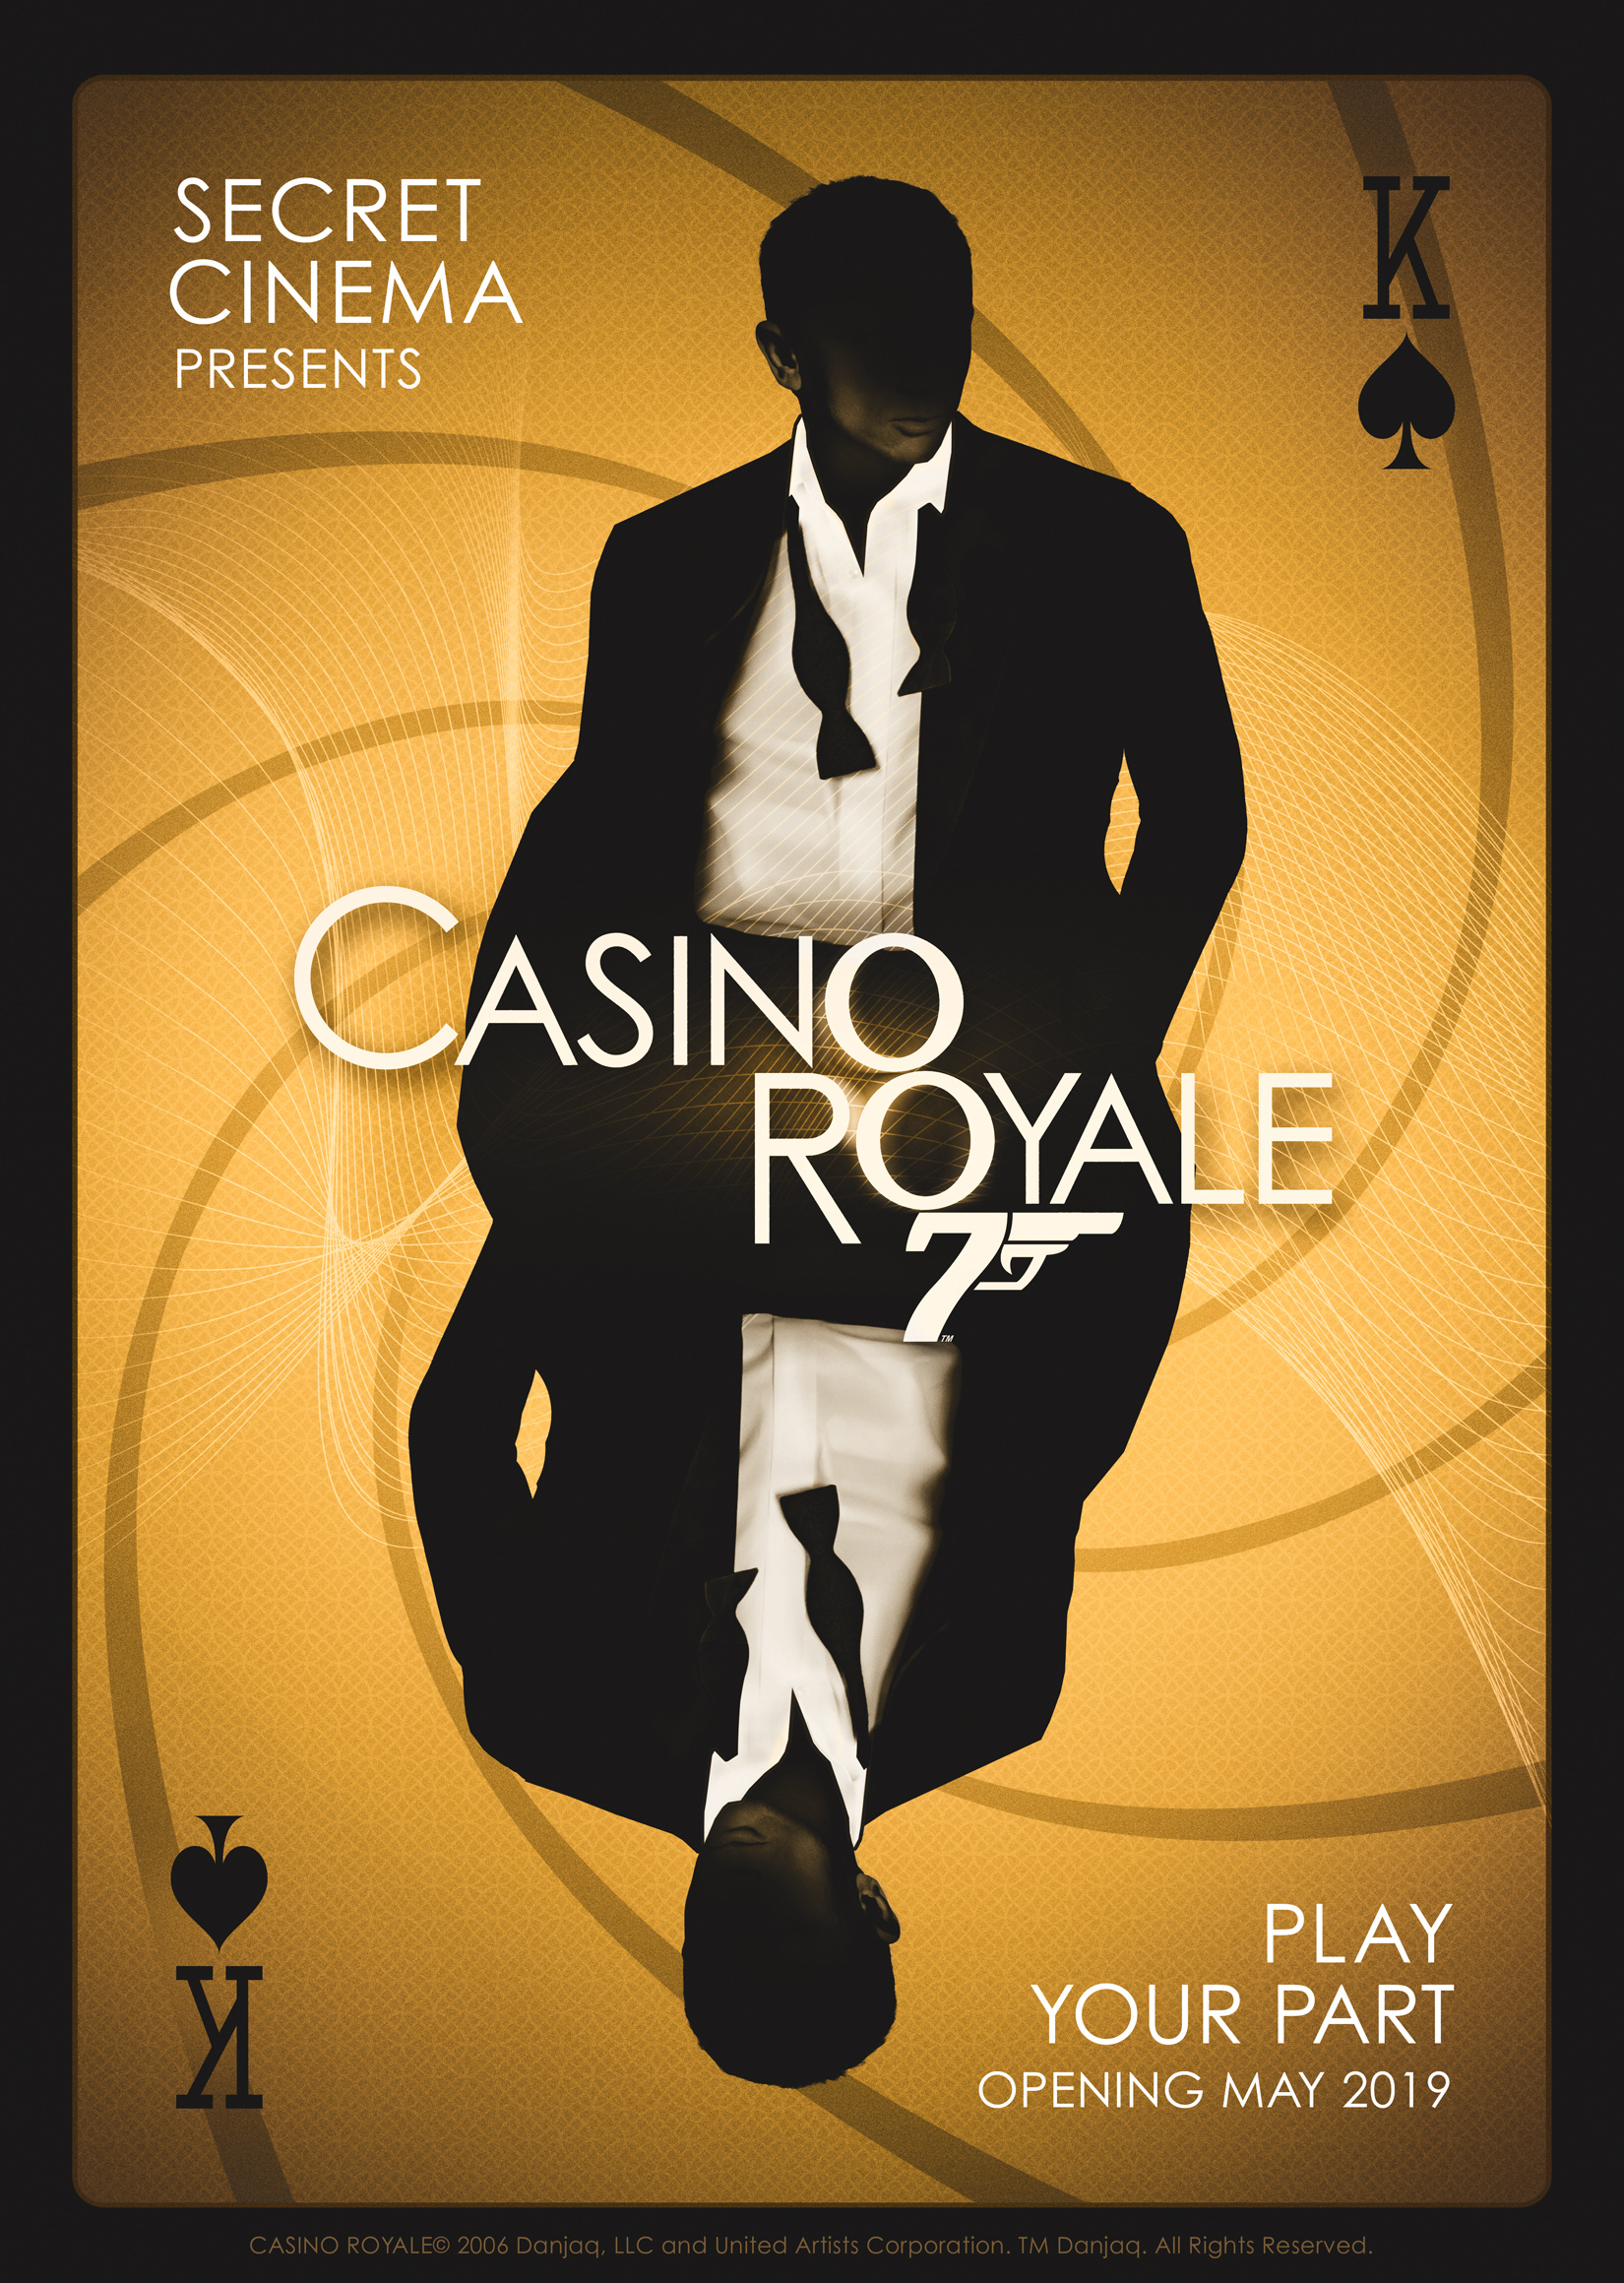 spectre movie poster casino royale movie poster